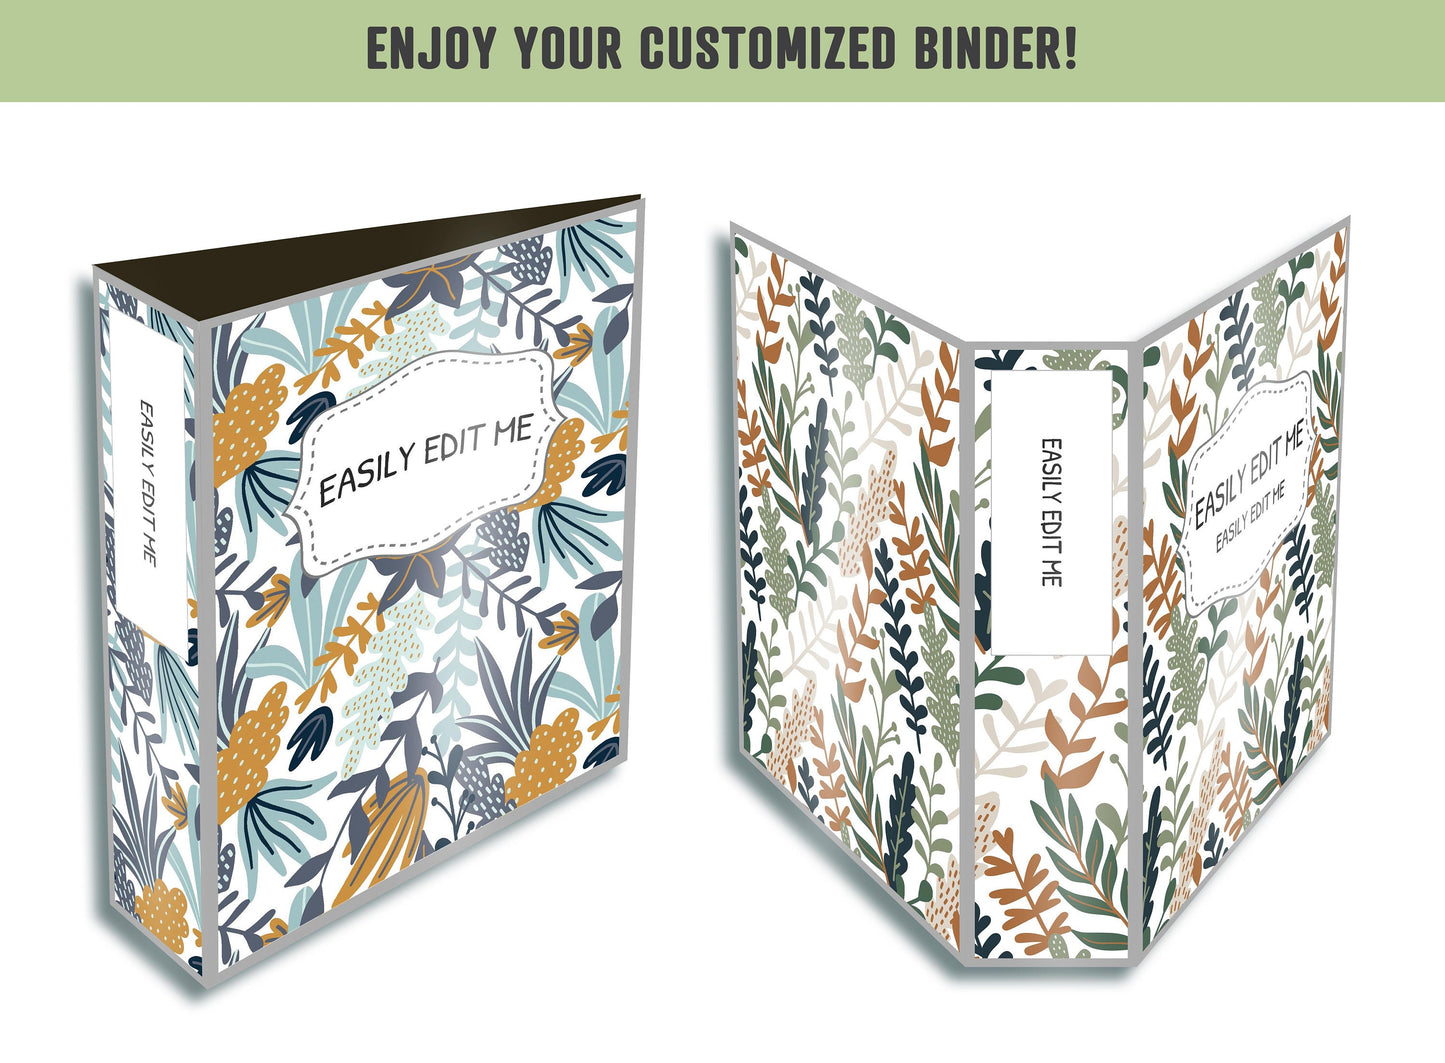 Floral Binder Cover, 10 Printable/Editable Covers+Spines, Binder Insert, Planner Cover, Teacher/School Binder Template, Leaves, Flower, PDF